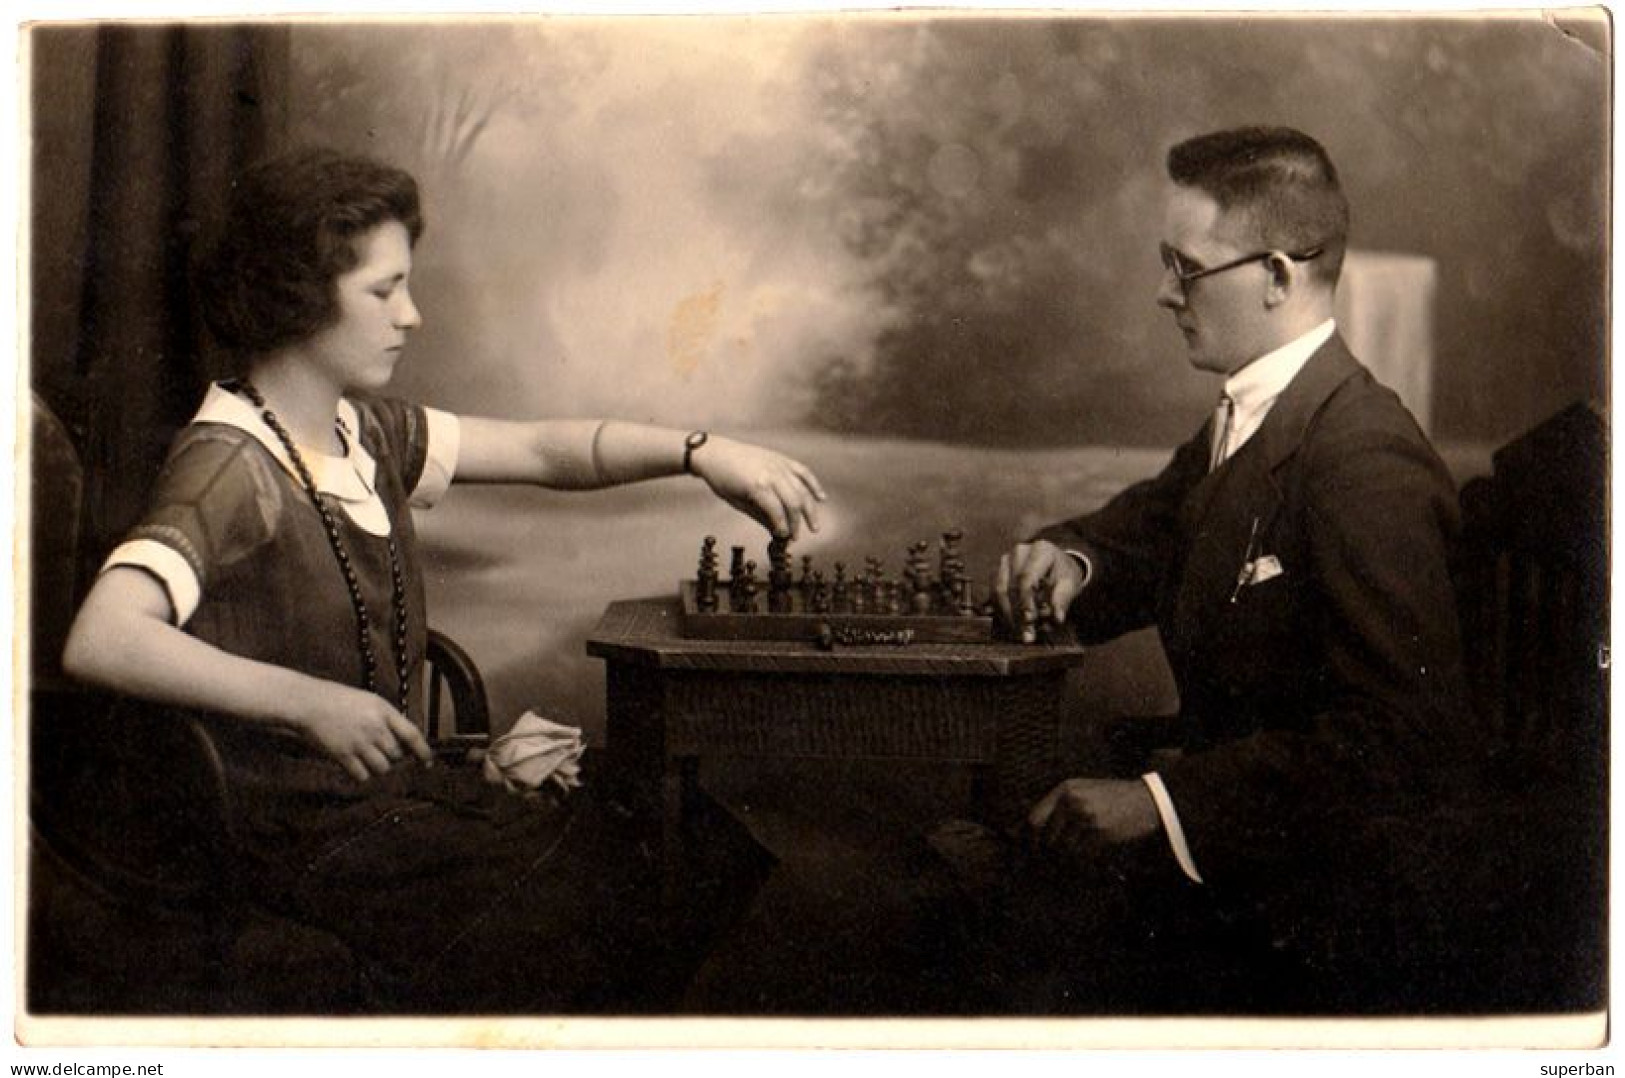 ECHECS / CHESS : ROUMANIE / ROMANIA : CHESS GAME / PARTIE D'ECHECS - CARTE VRAIE PHOTO / REAL PHOTO ~ 1935 - '40 (an322) - Schaken